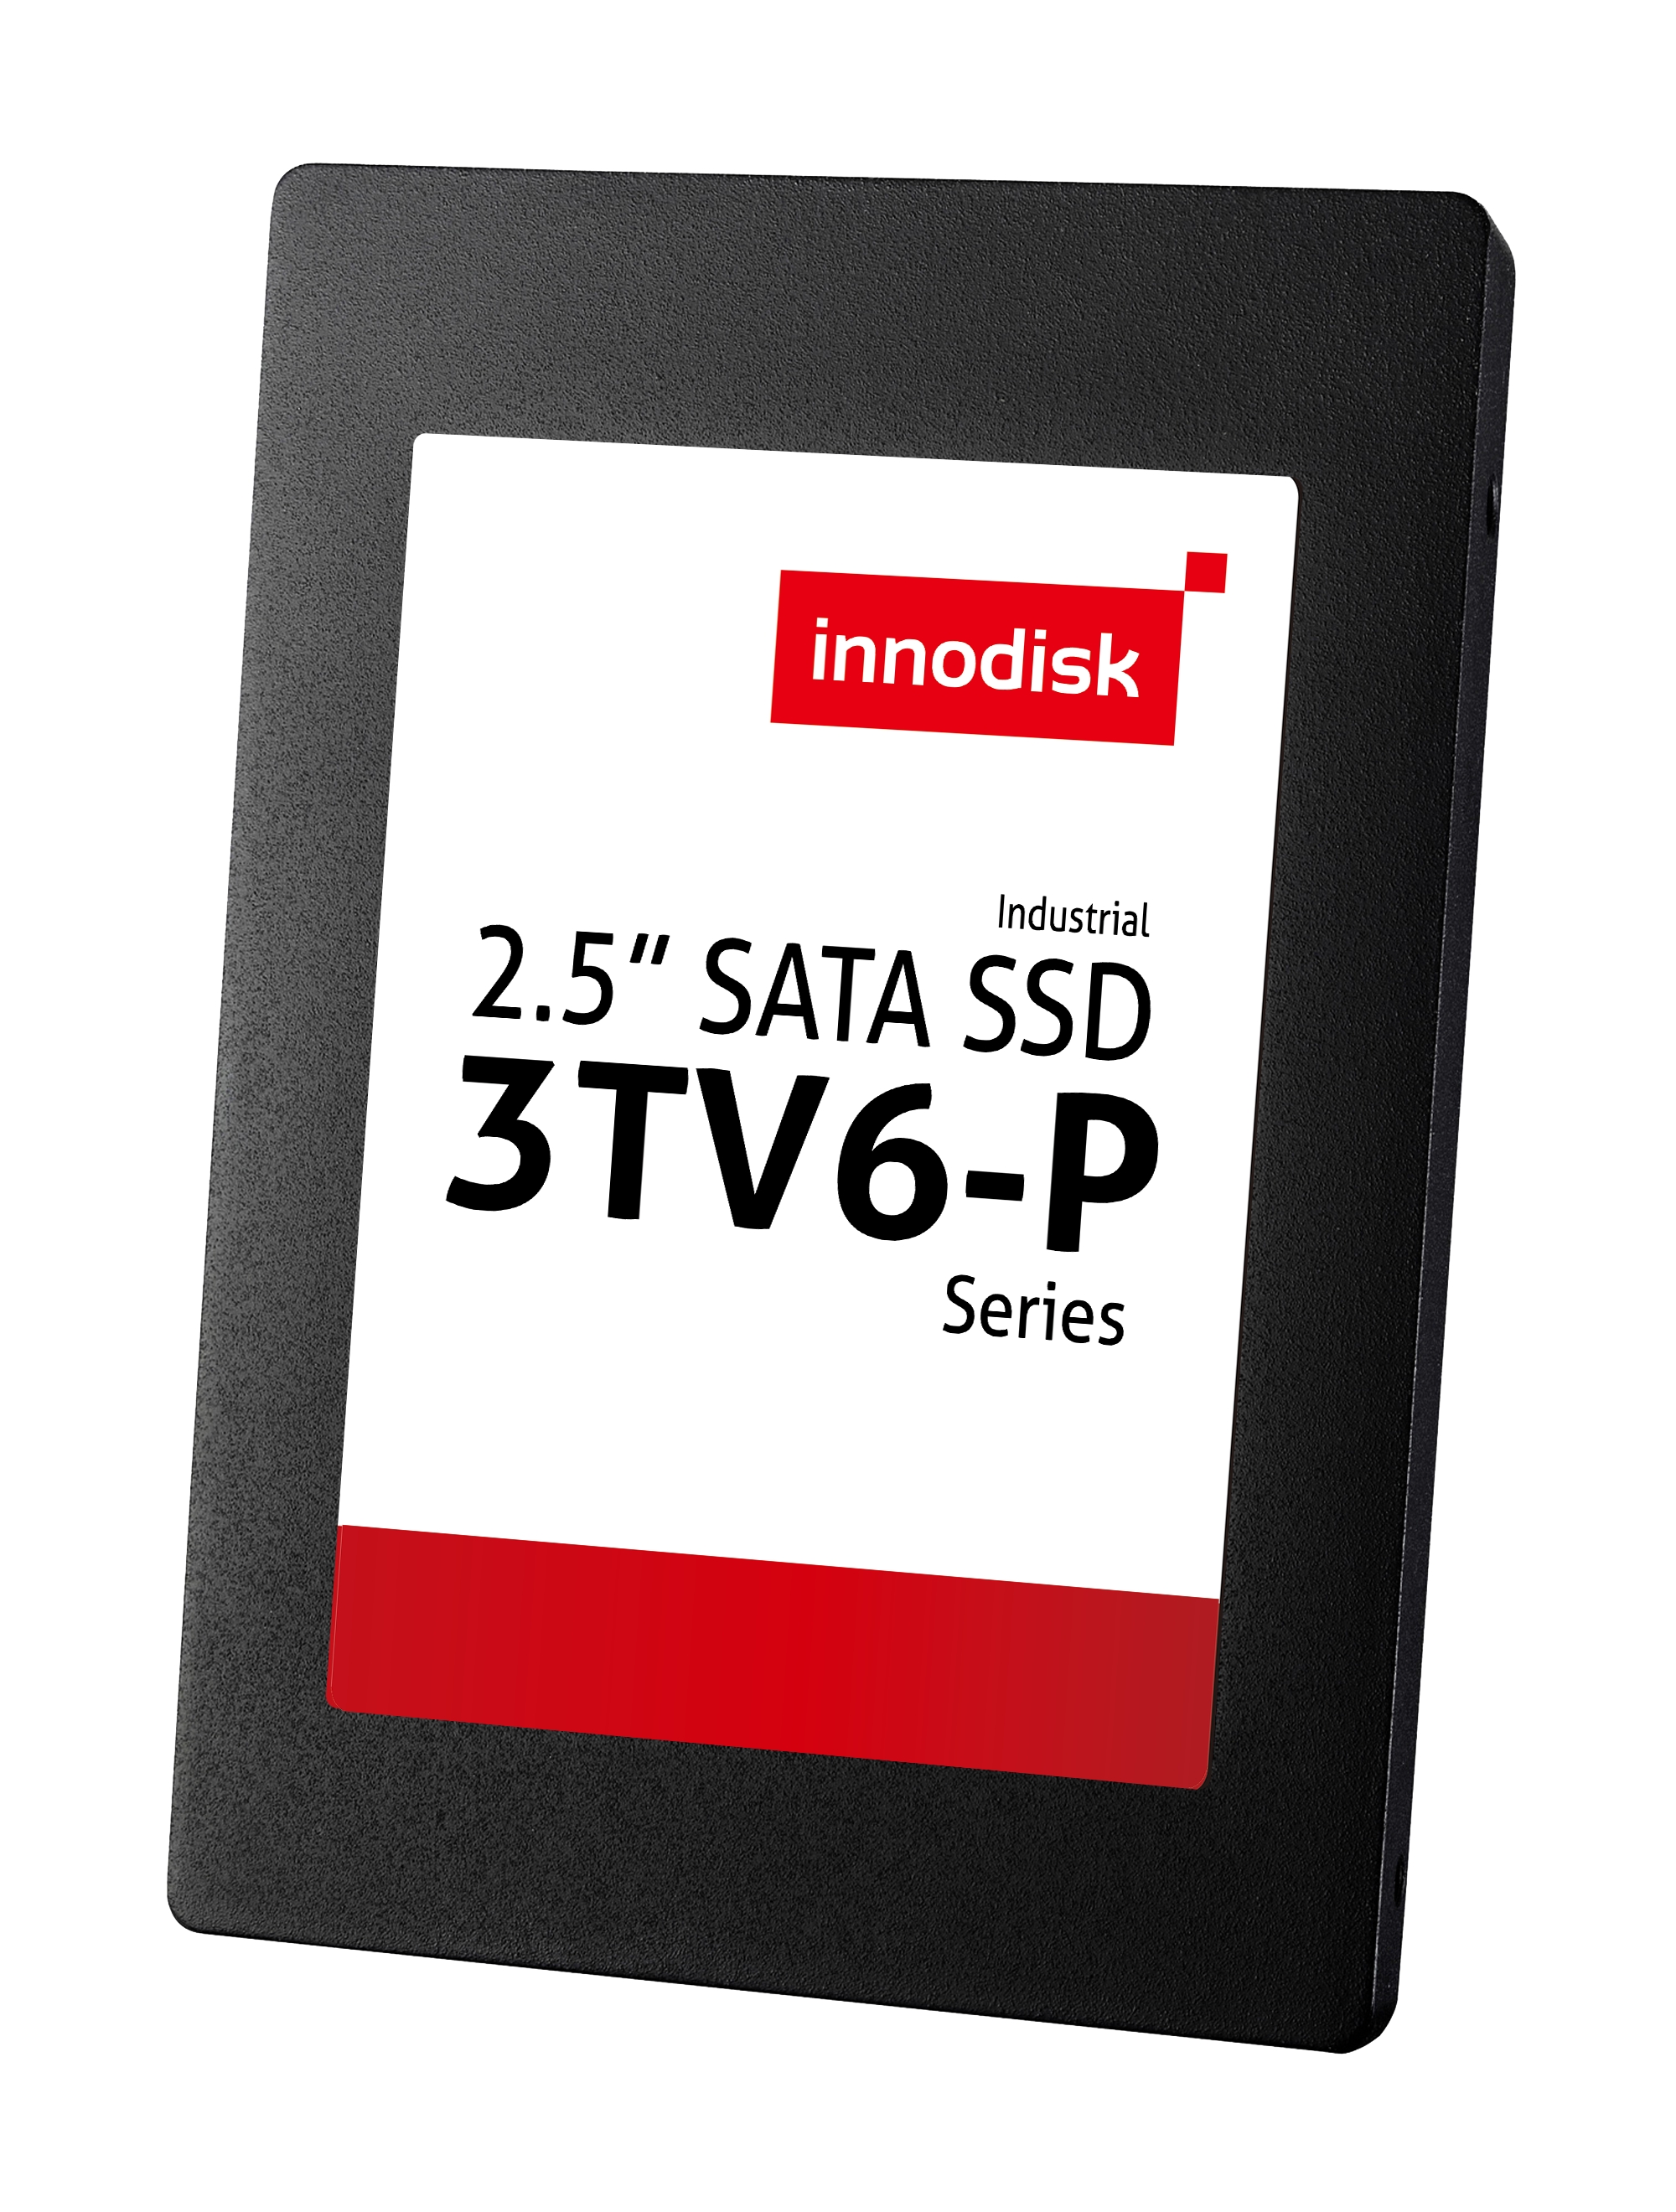 2,5" SATA SSD, InnoREC, 3TV6-P, MLC